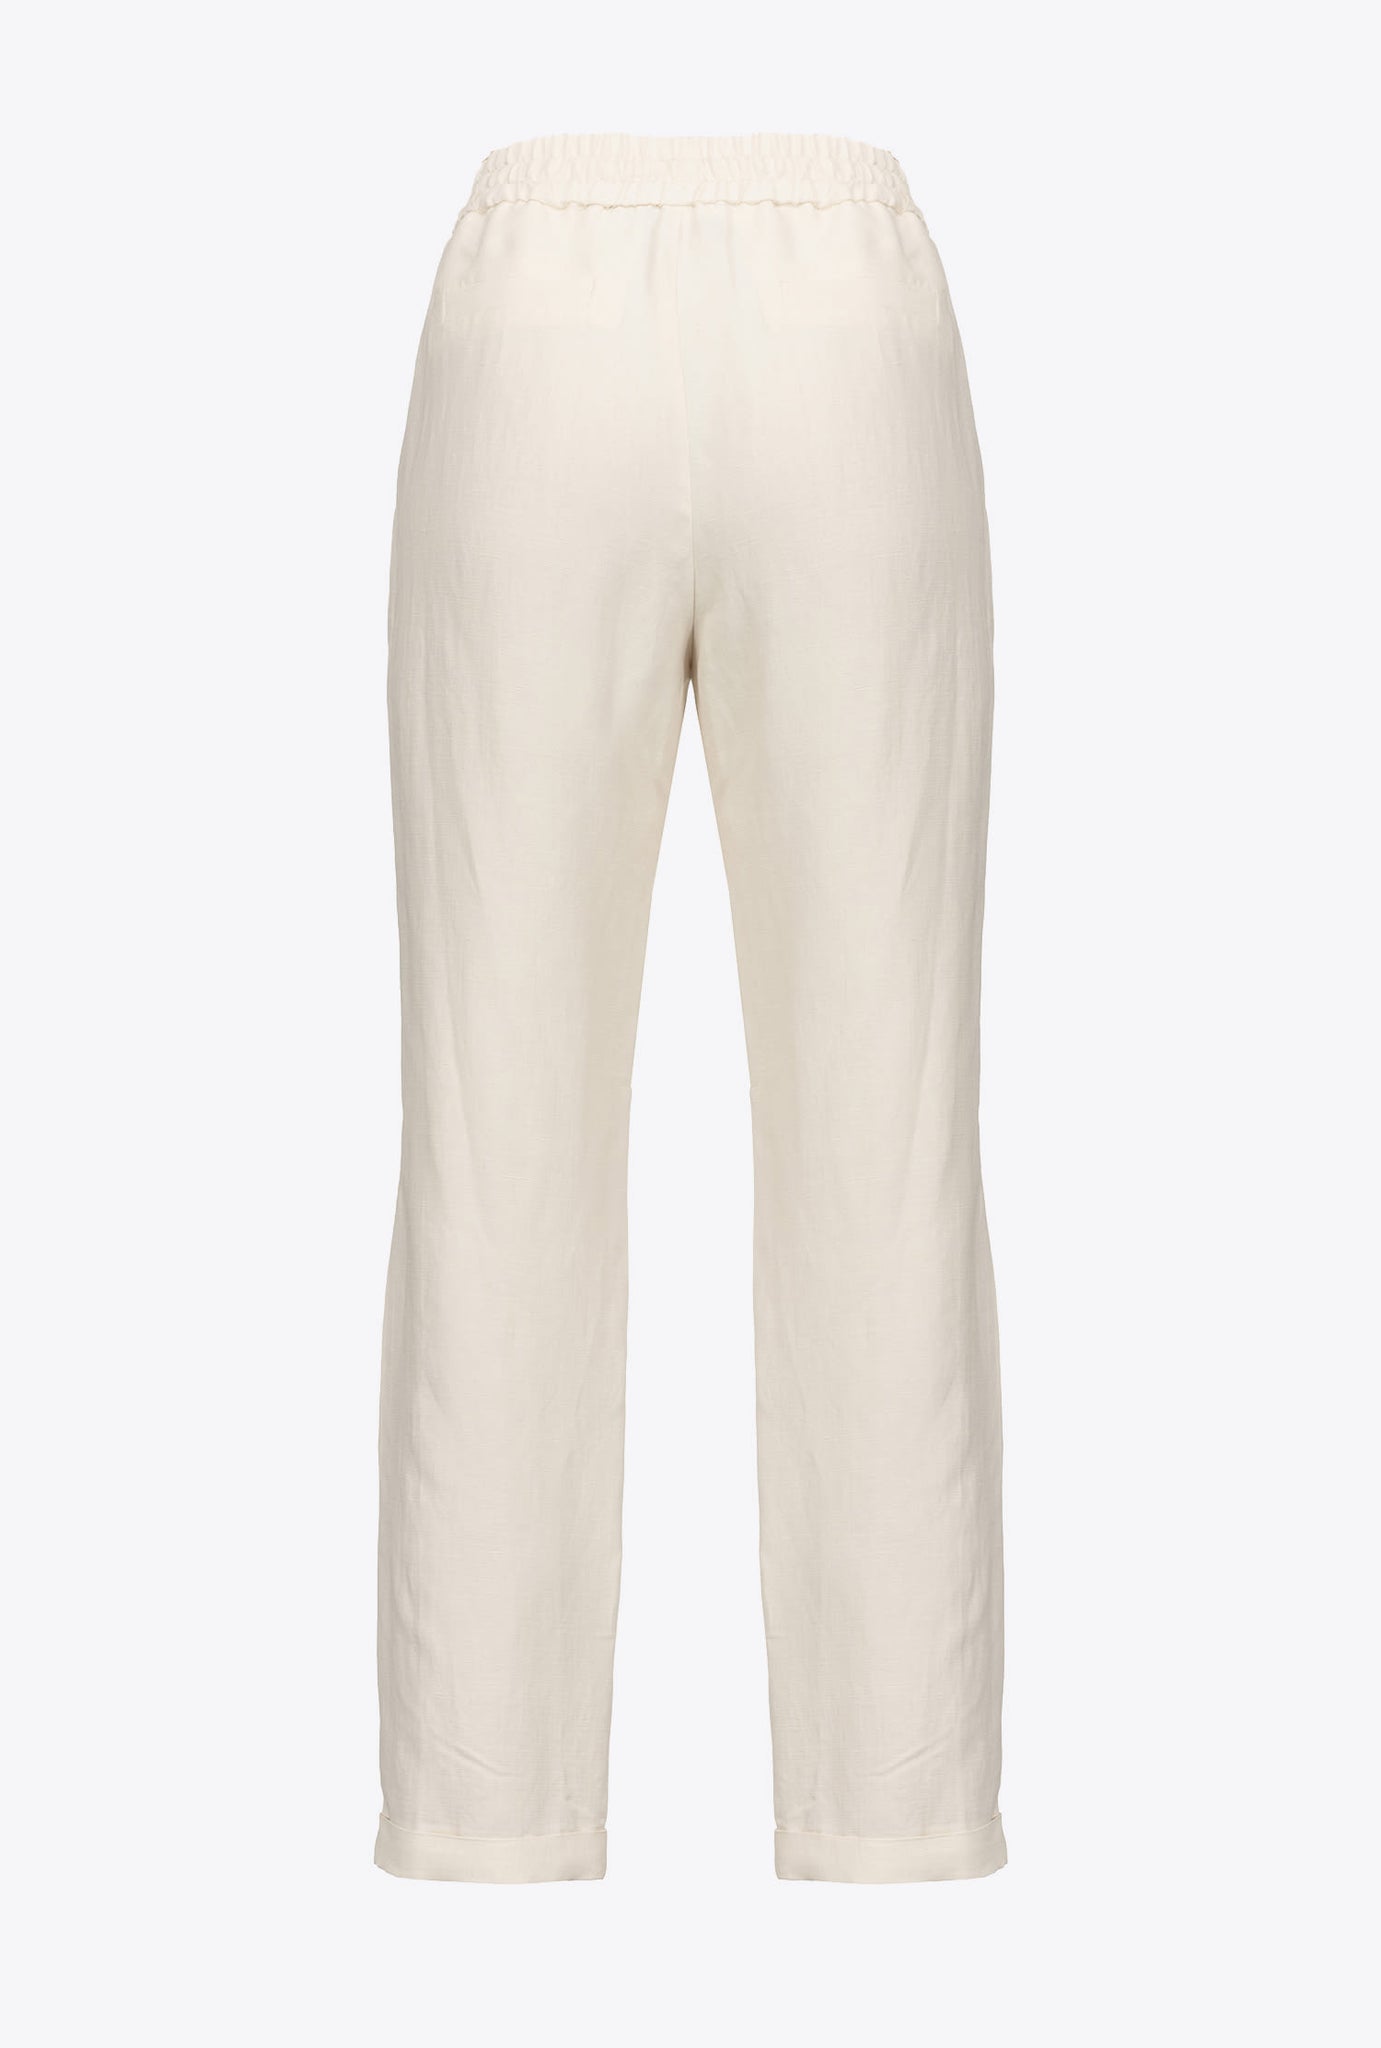 Pantalone Pinko con Coulisse / Bianco - Ideal Moda